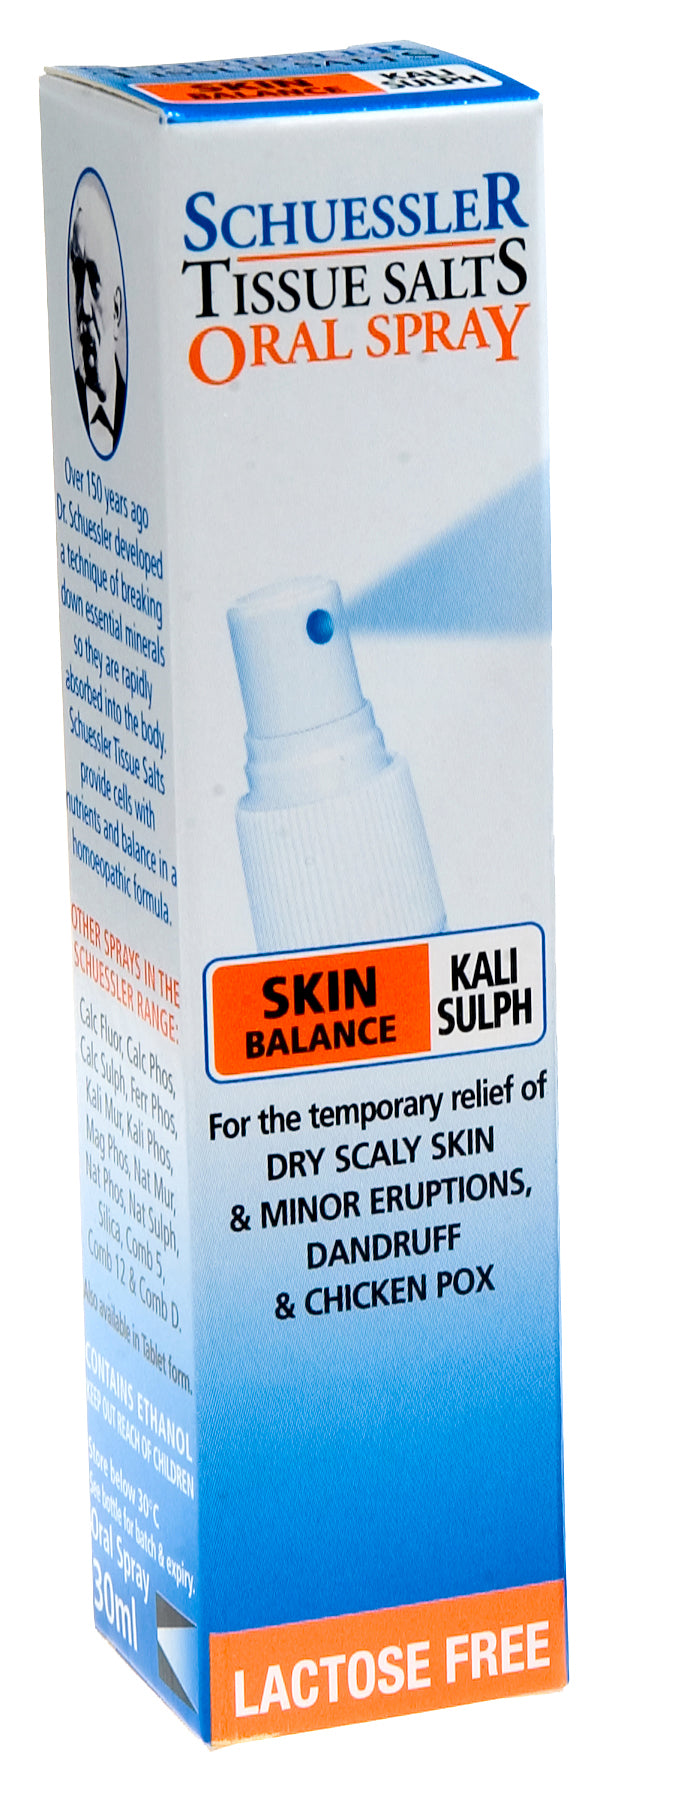 Schuessler Tissue Salts - Kali Sulph Spray